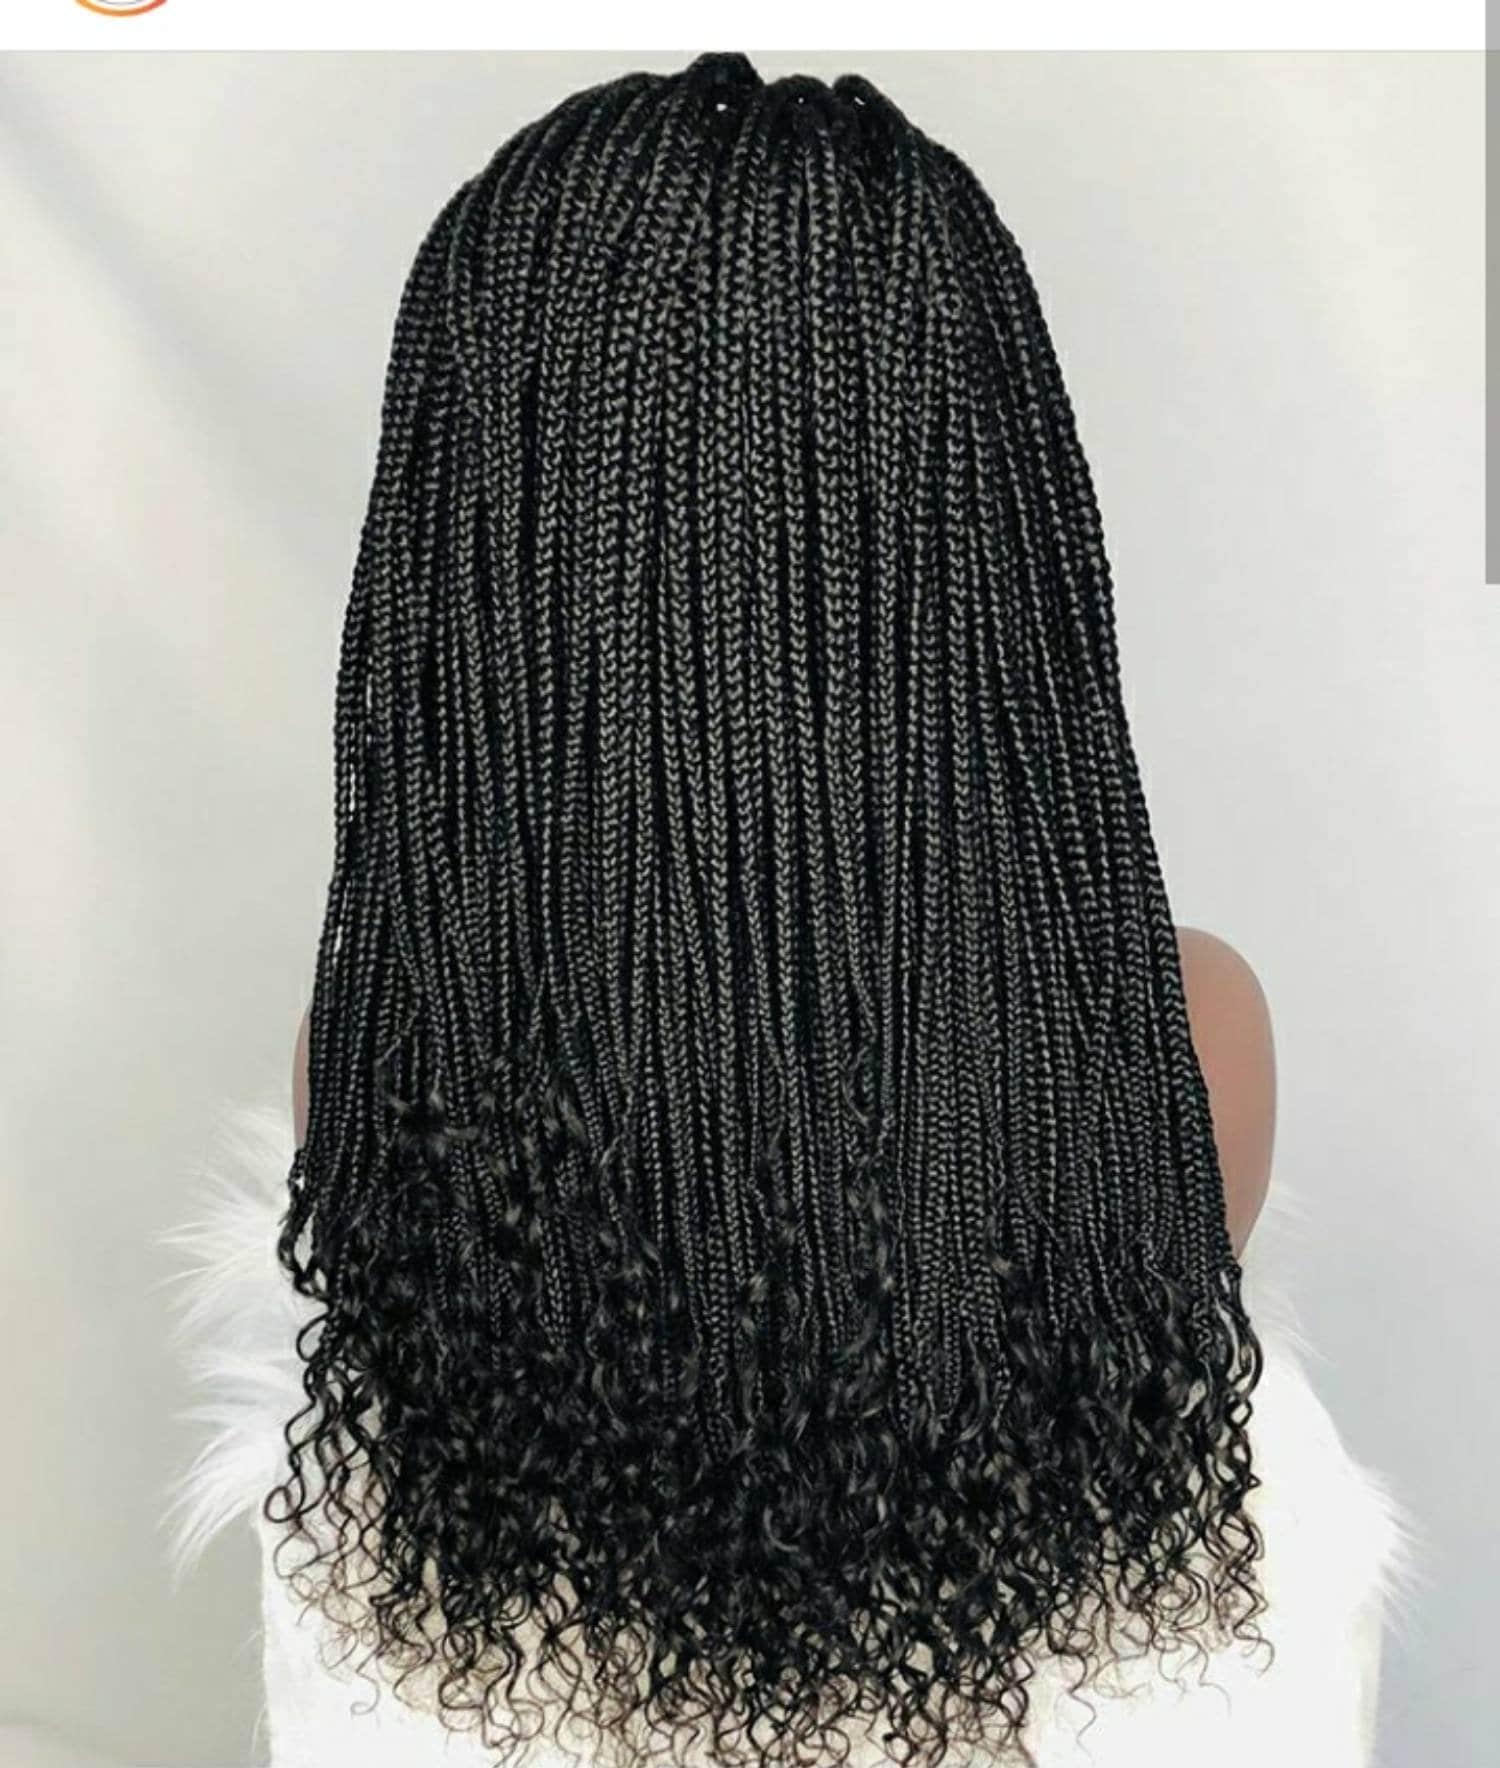 BRAIDED WIG. Full Lace Frontal braided wig. Nigeria woman | Etsy